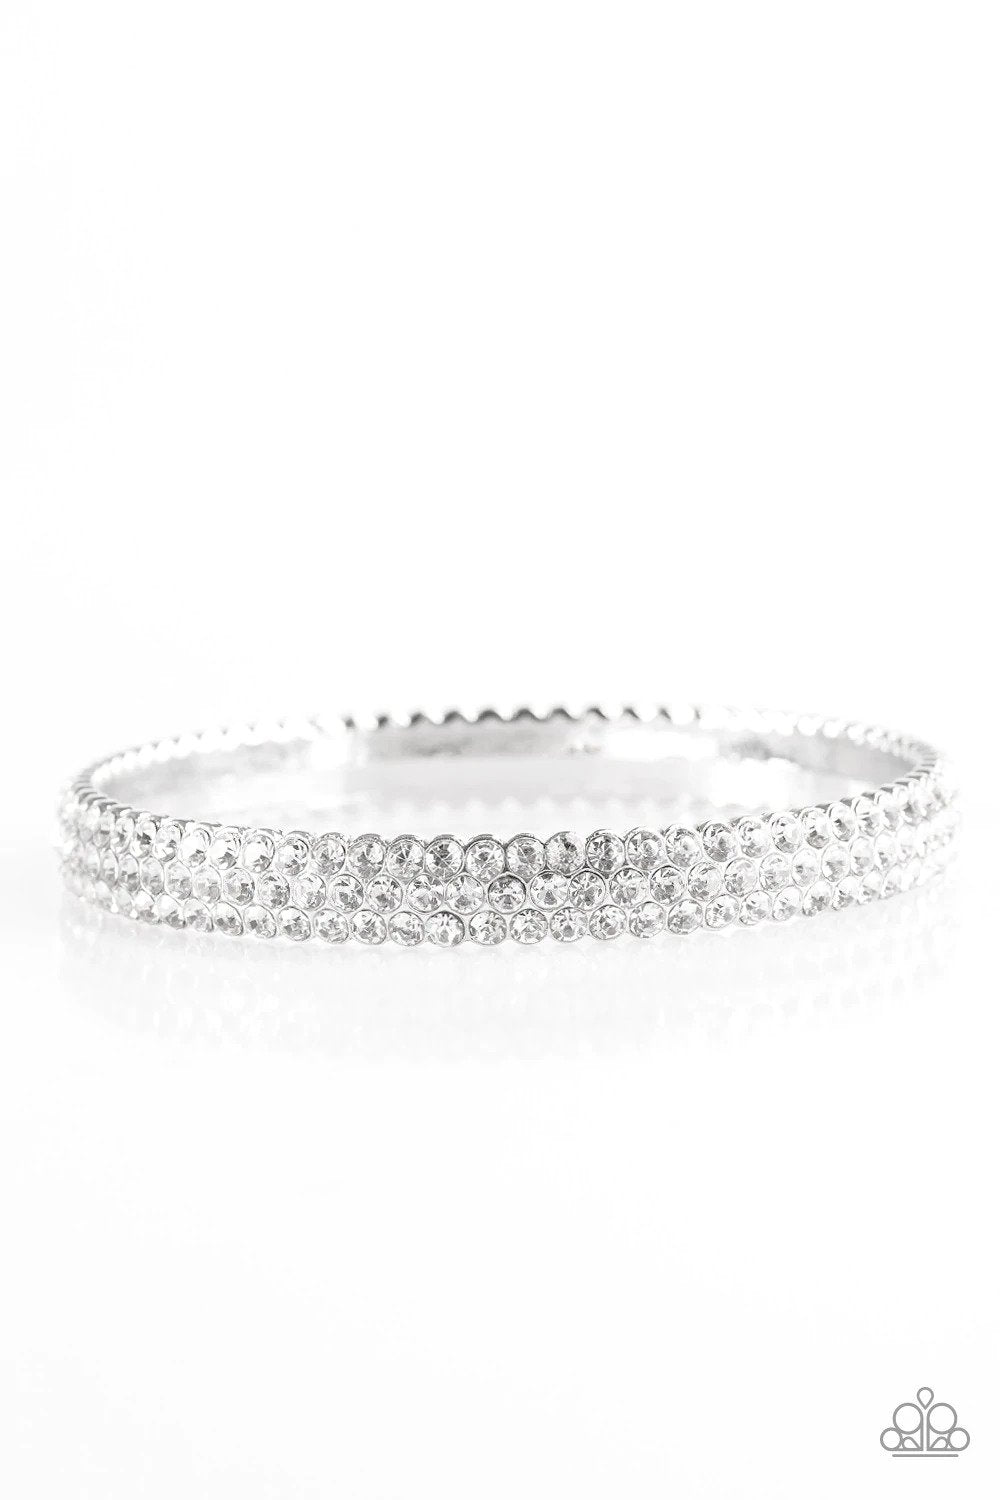 Ballroom Bling White Rhinestone Bangle Bracelet - Paparazzi Accessories- lightbox - CarasShop.com - $5 Jewelry by Cara Jewels